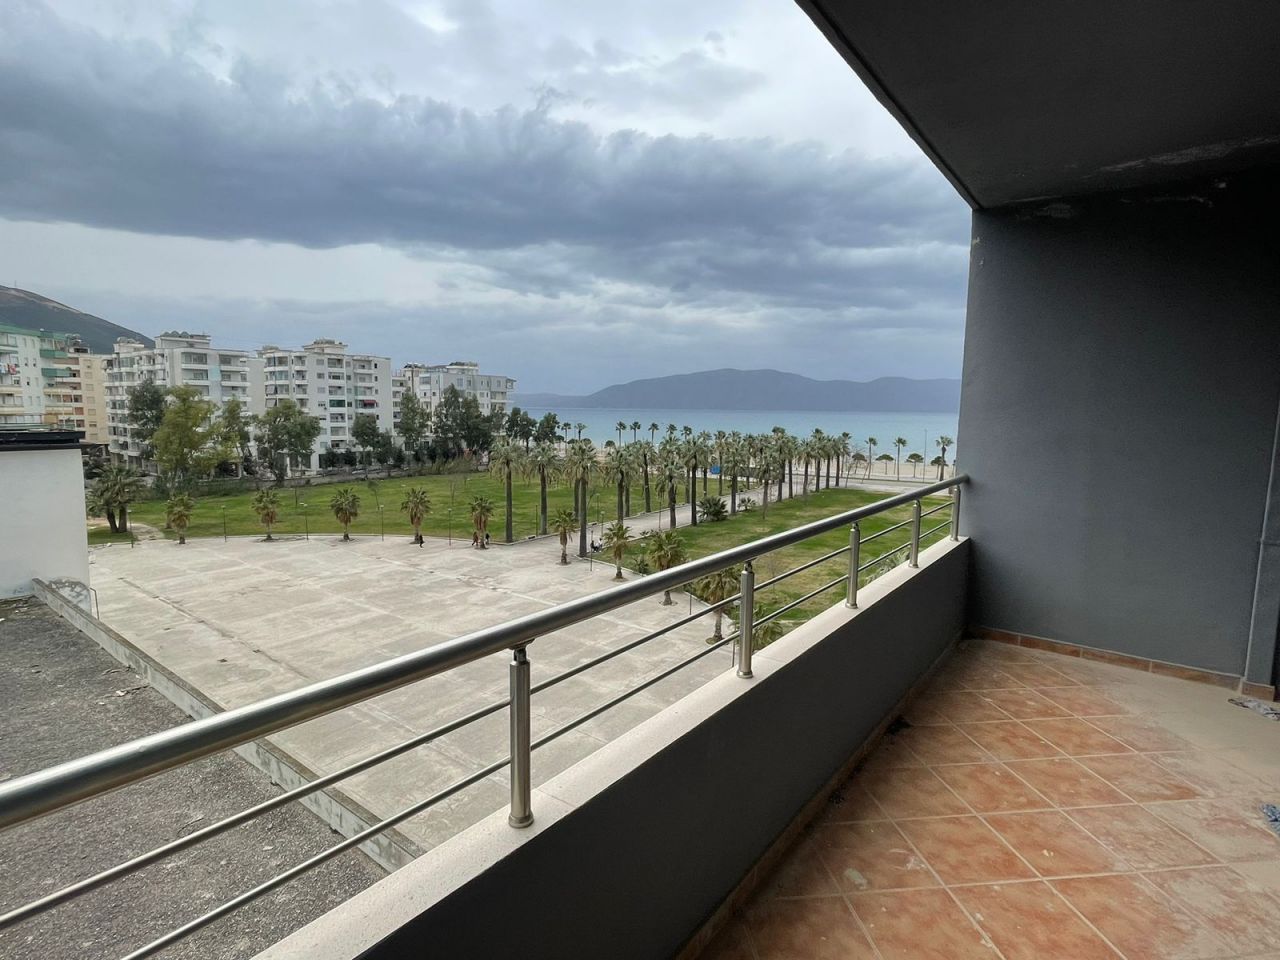  Apartment For Sale In Vlore Albania